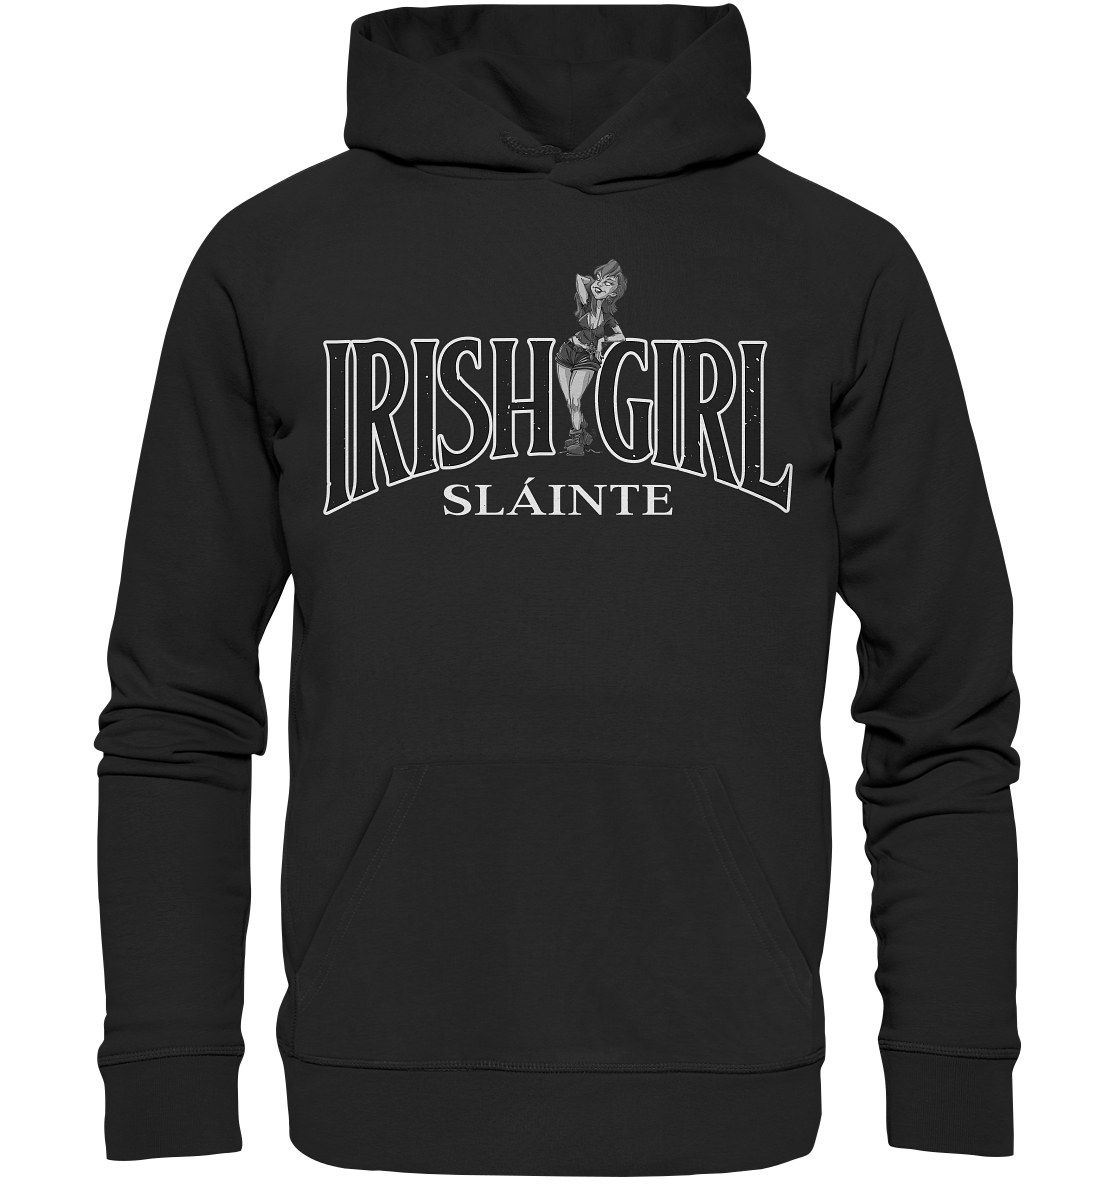 Irish Girl "Sláinte" - Premium Unisex Hoodie